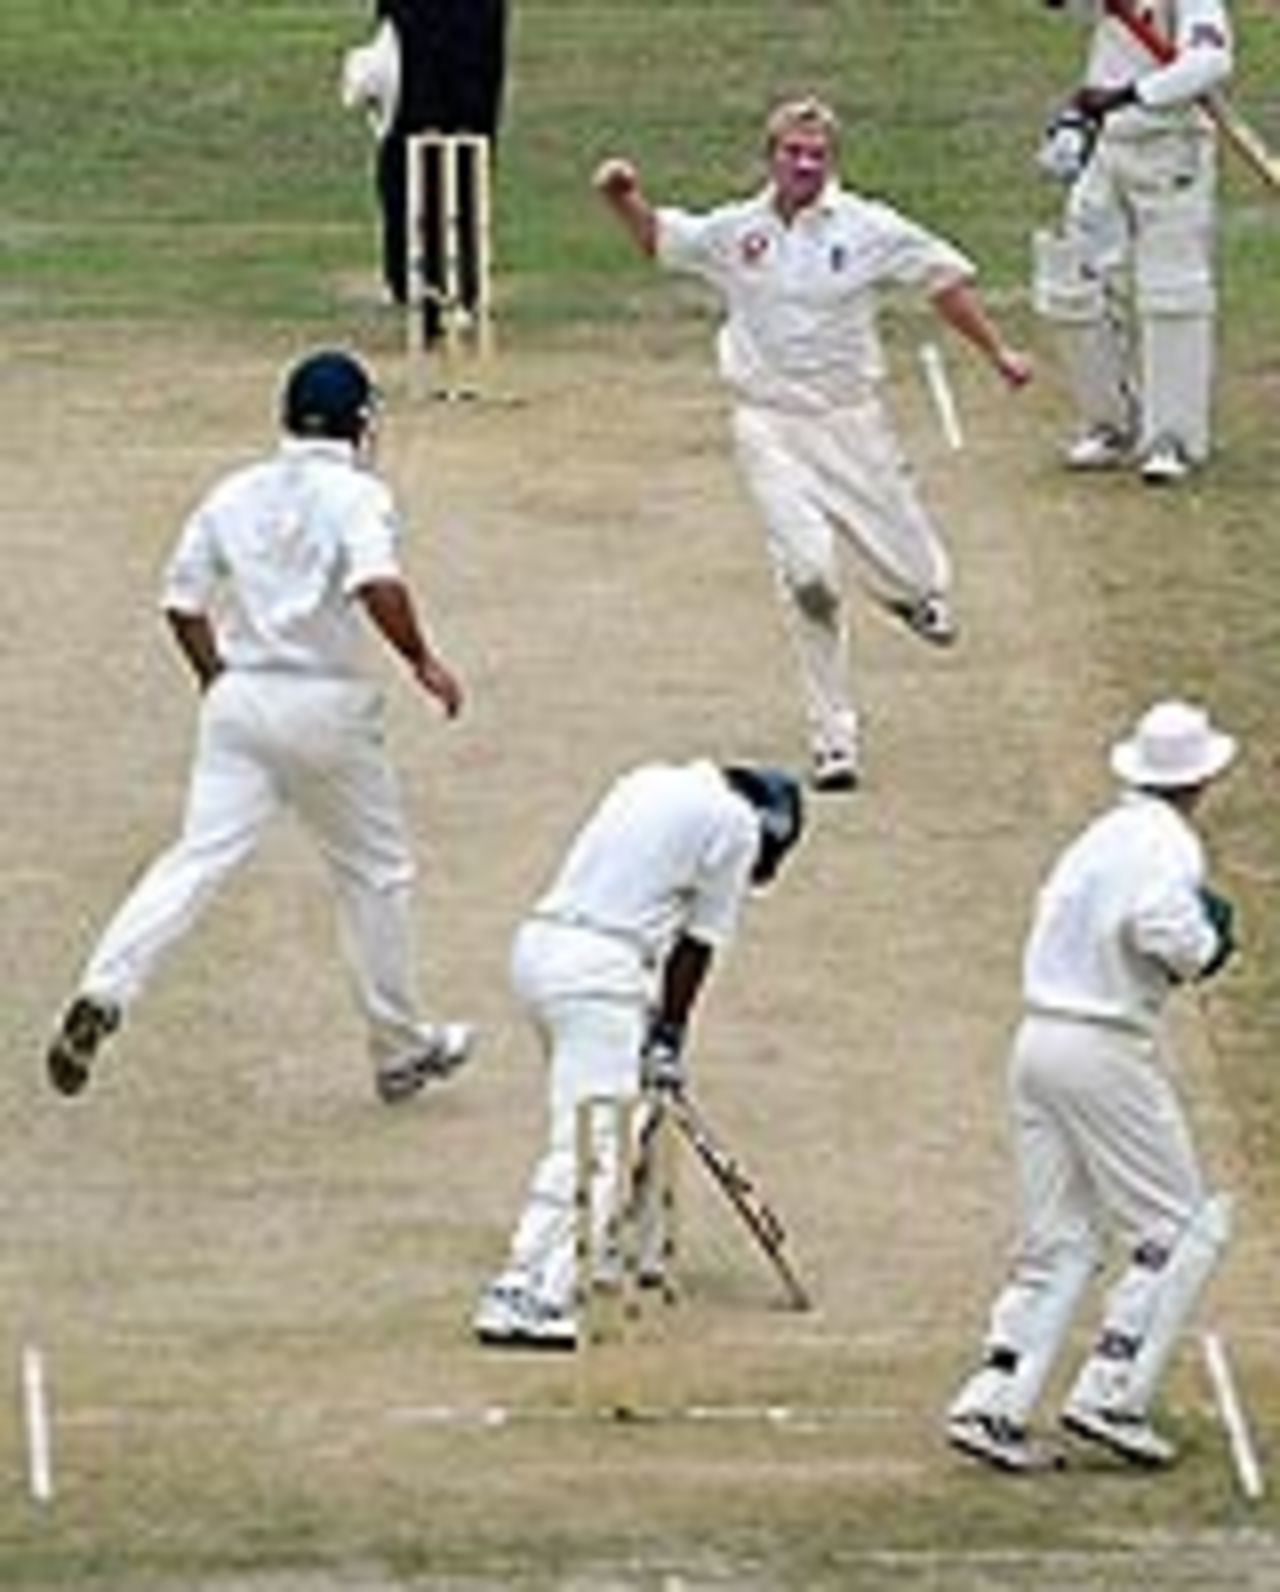 Habibul Bashar dismissed by Gareth Batty, Bangladesh v England, 1st Test, Dhaka, October 24 2003